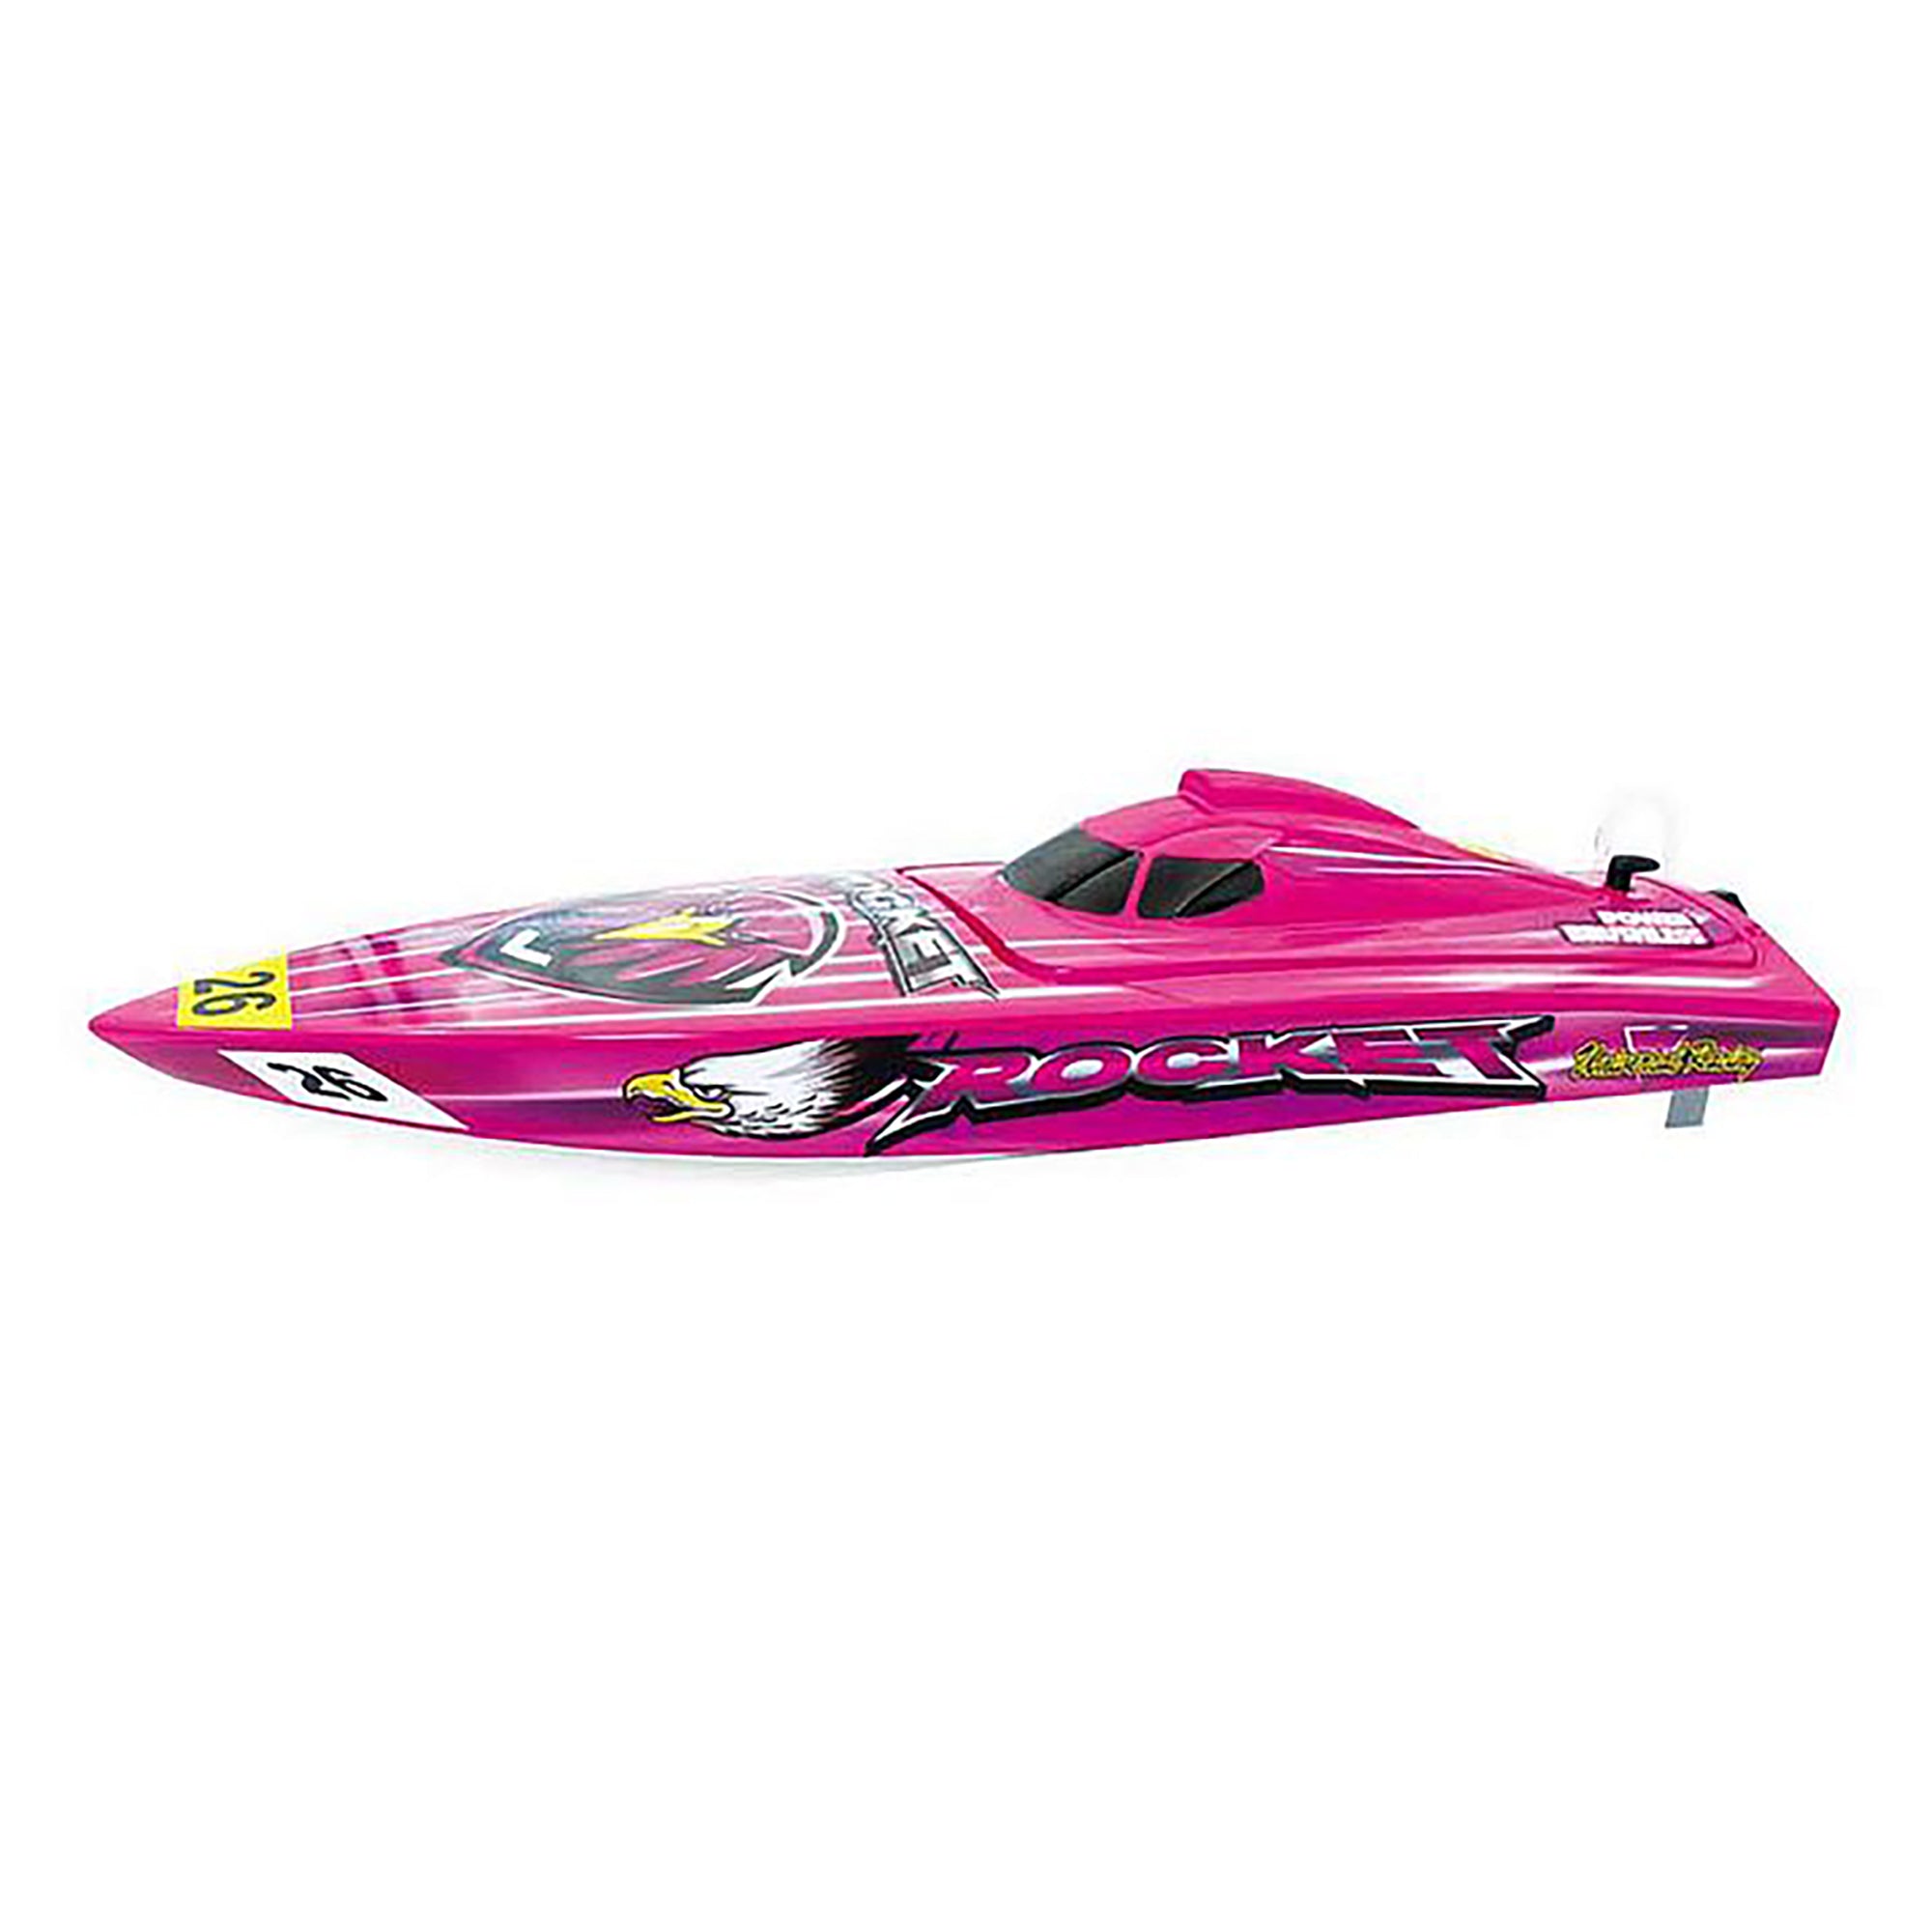 Joysway 8651 Rocket ABS Hull 2.4GHz Brushless Deep Vee RC Racing Boat, Multicolour